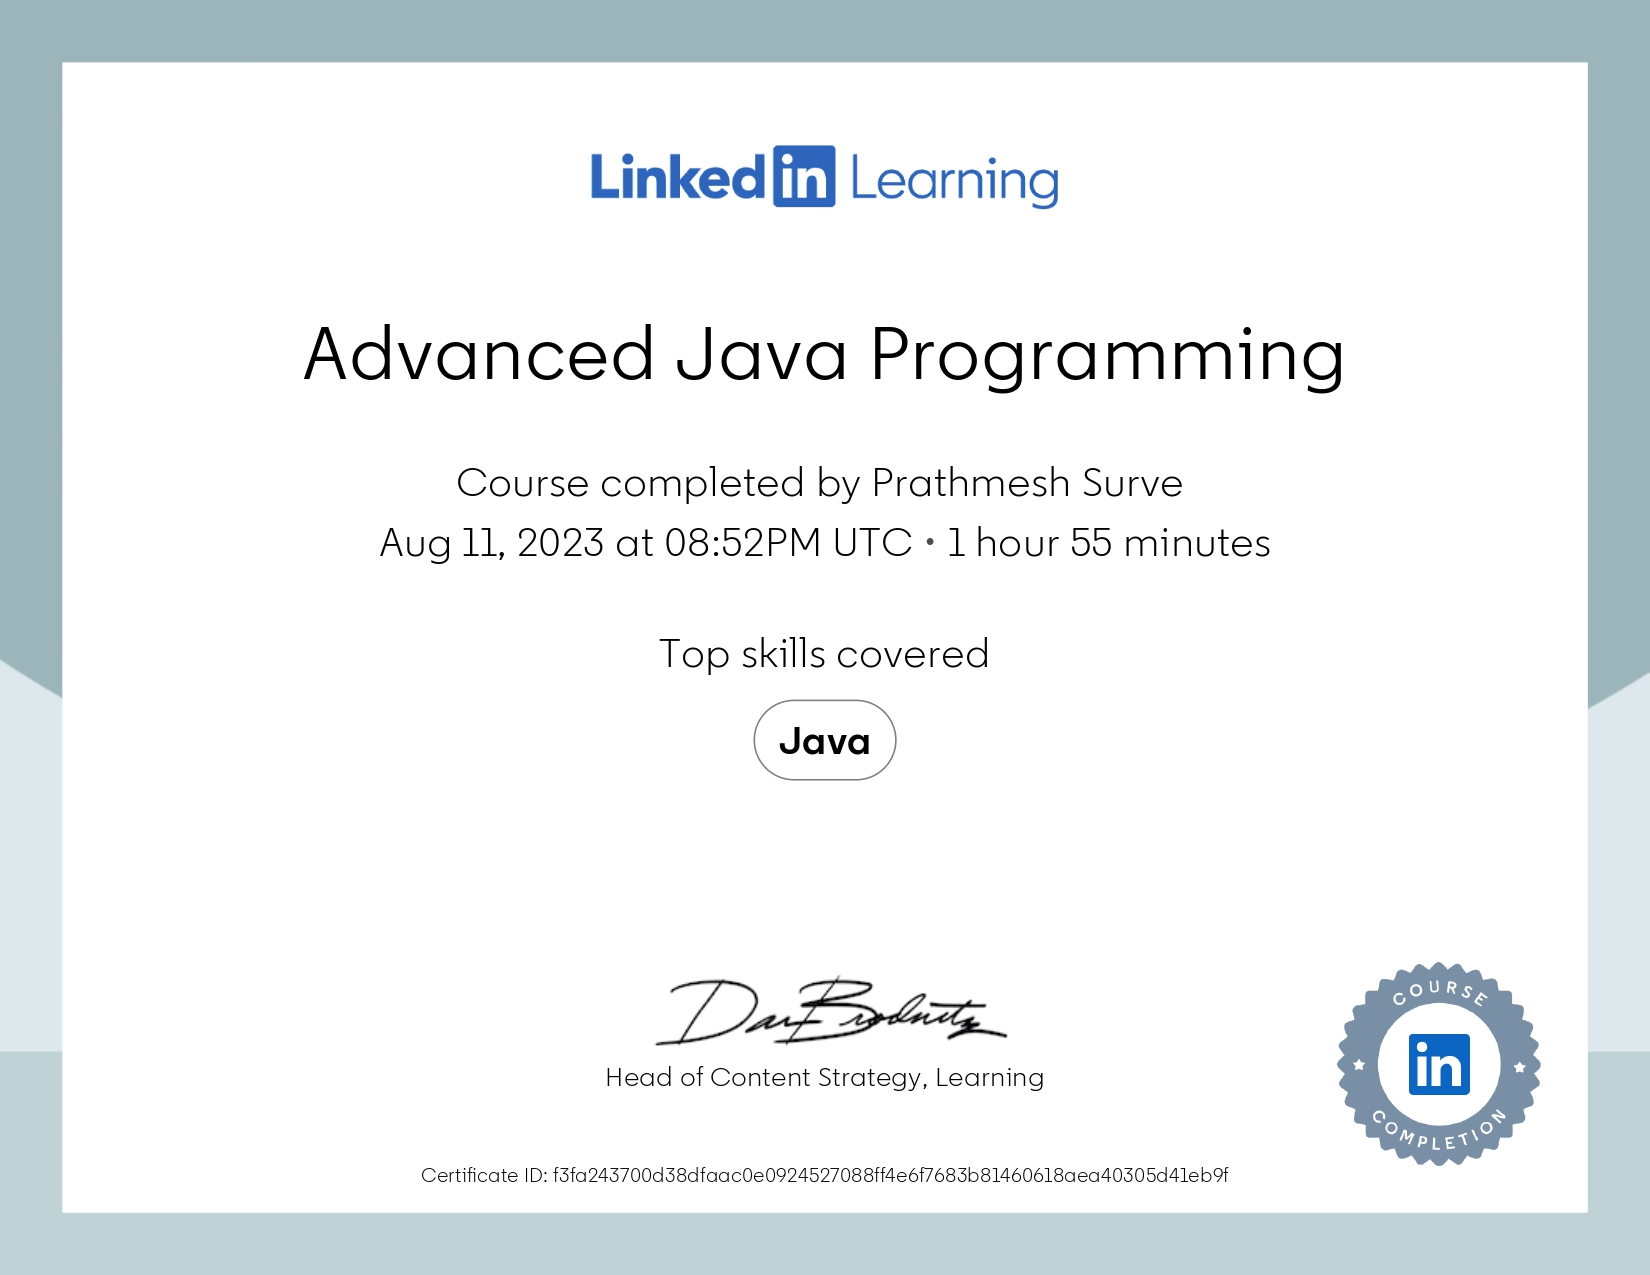 Advanced Java Programming Certificate by LinkedIn